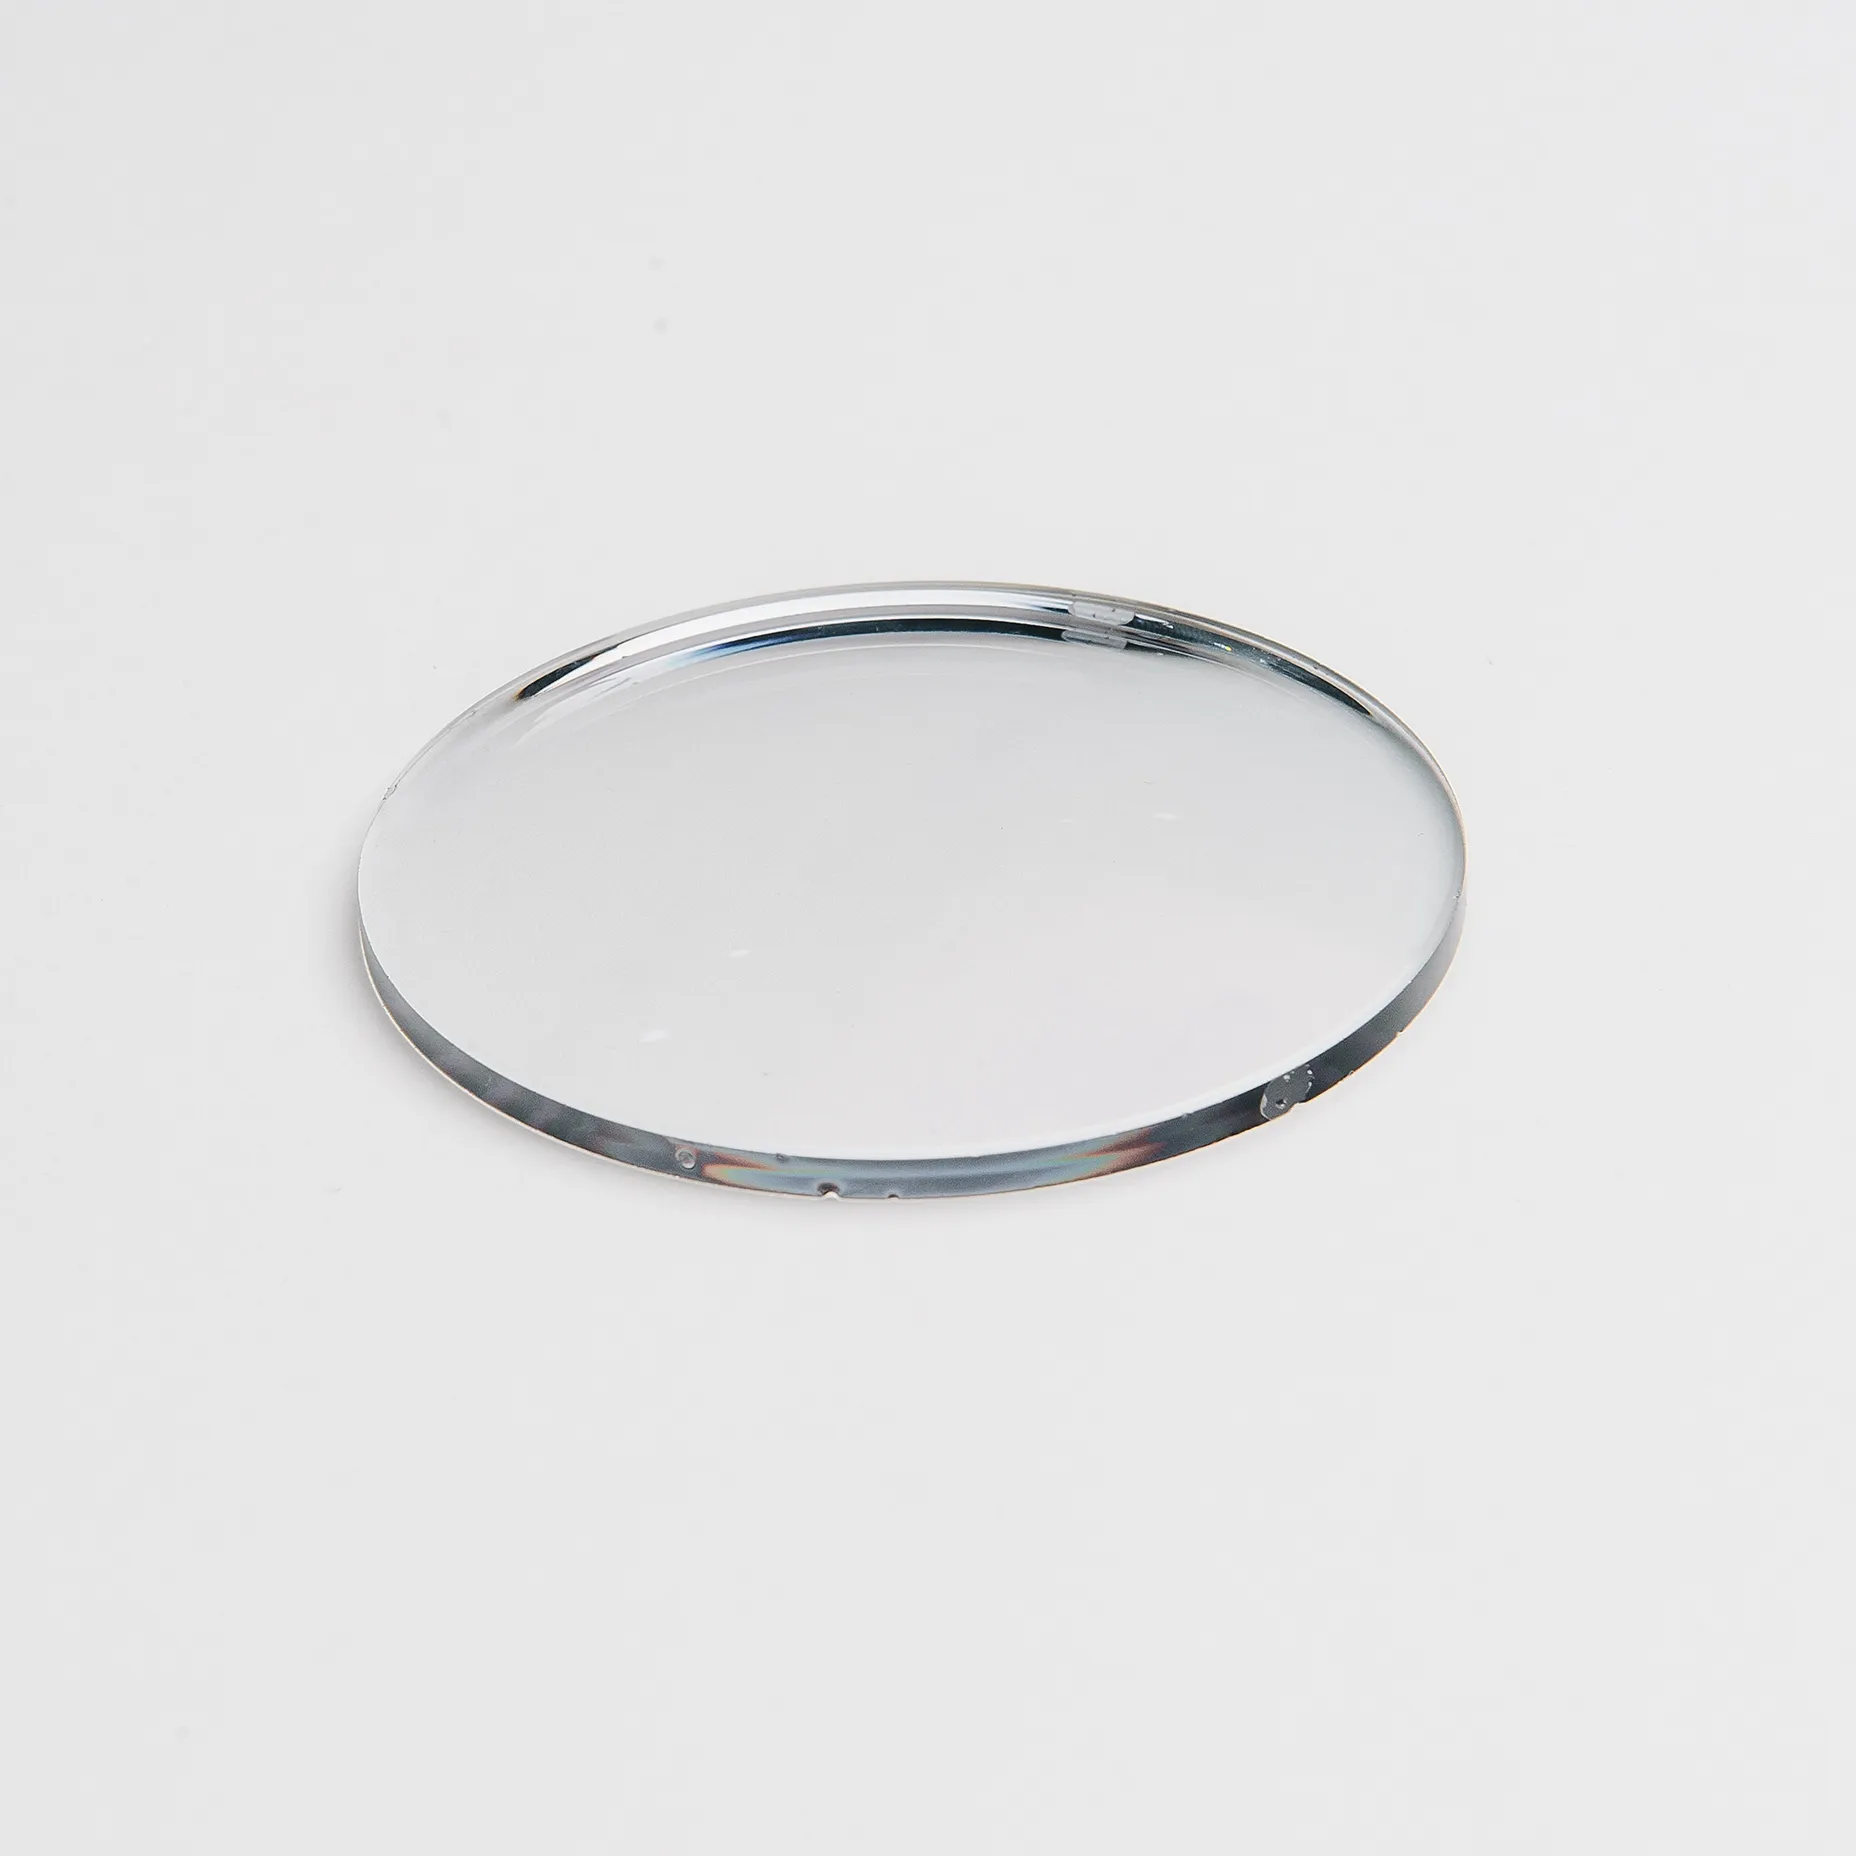 China Manufacturer Low Price Eyeglasses Lens Single Vision 1.56 HMC Optical Lenses